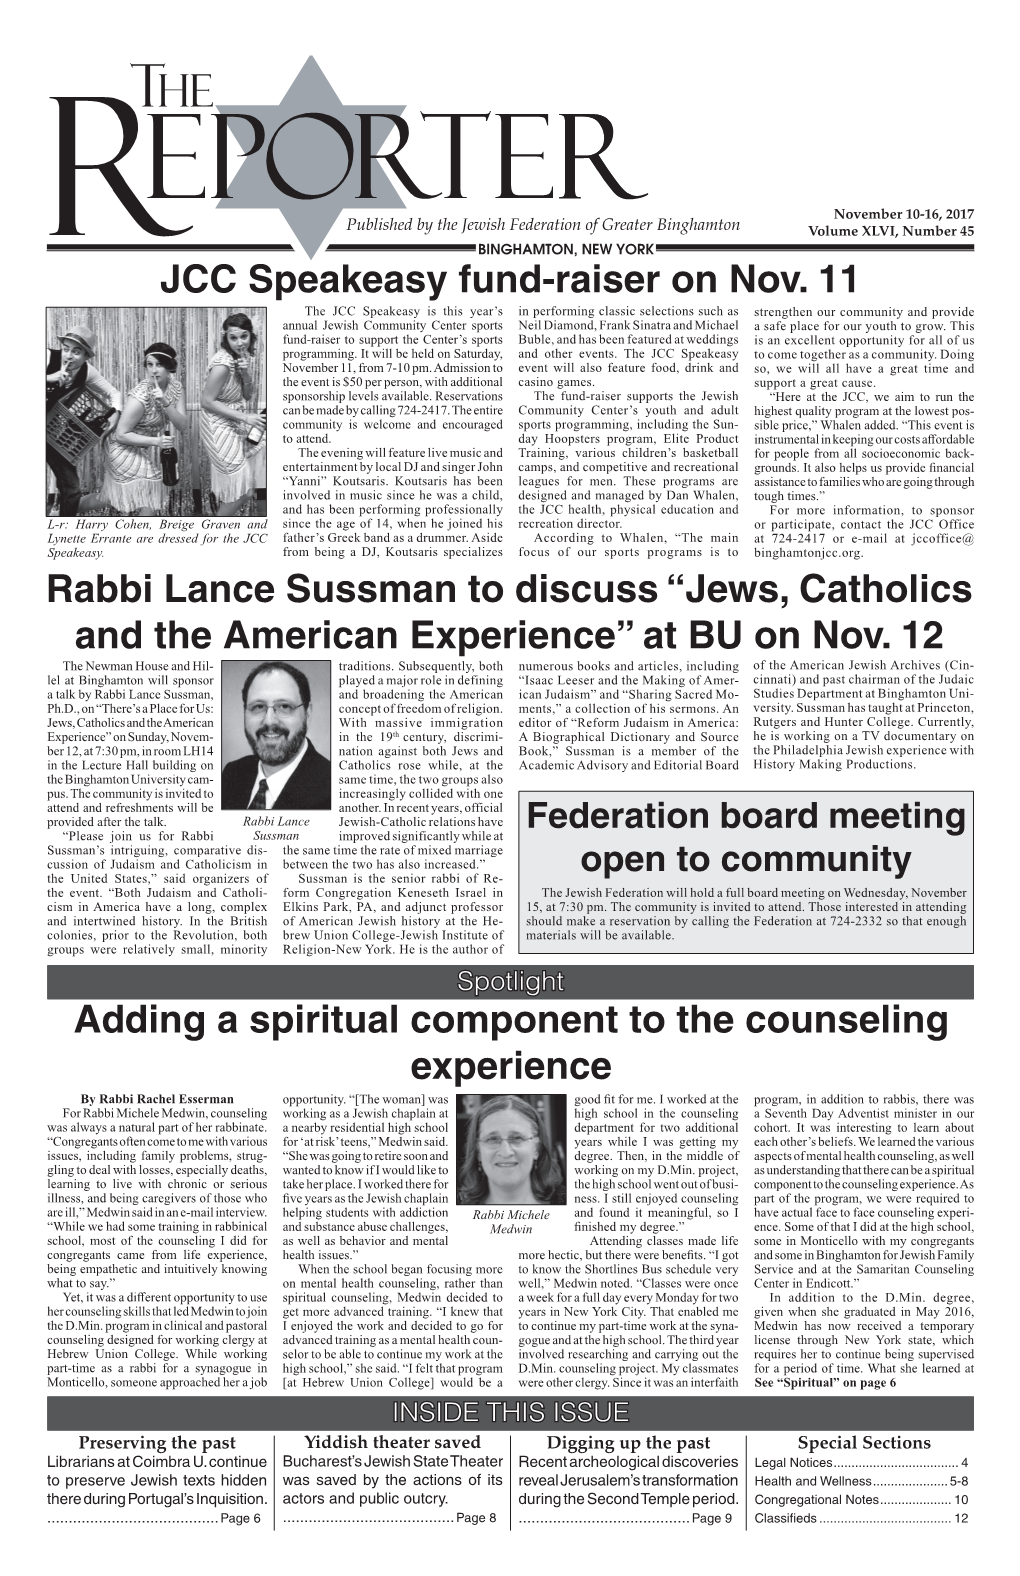 JCC Speakeasy Fund-Raiser on Nov. 11 Rabbi Lance Sussman to Discuss “Jews, Catholics and the American Experience” at BU on N